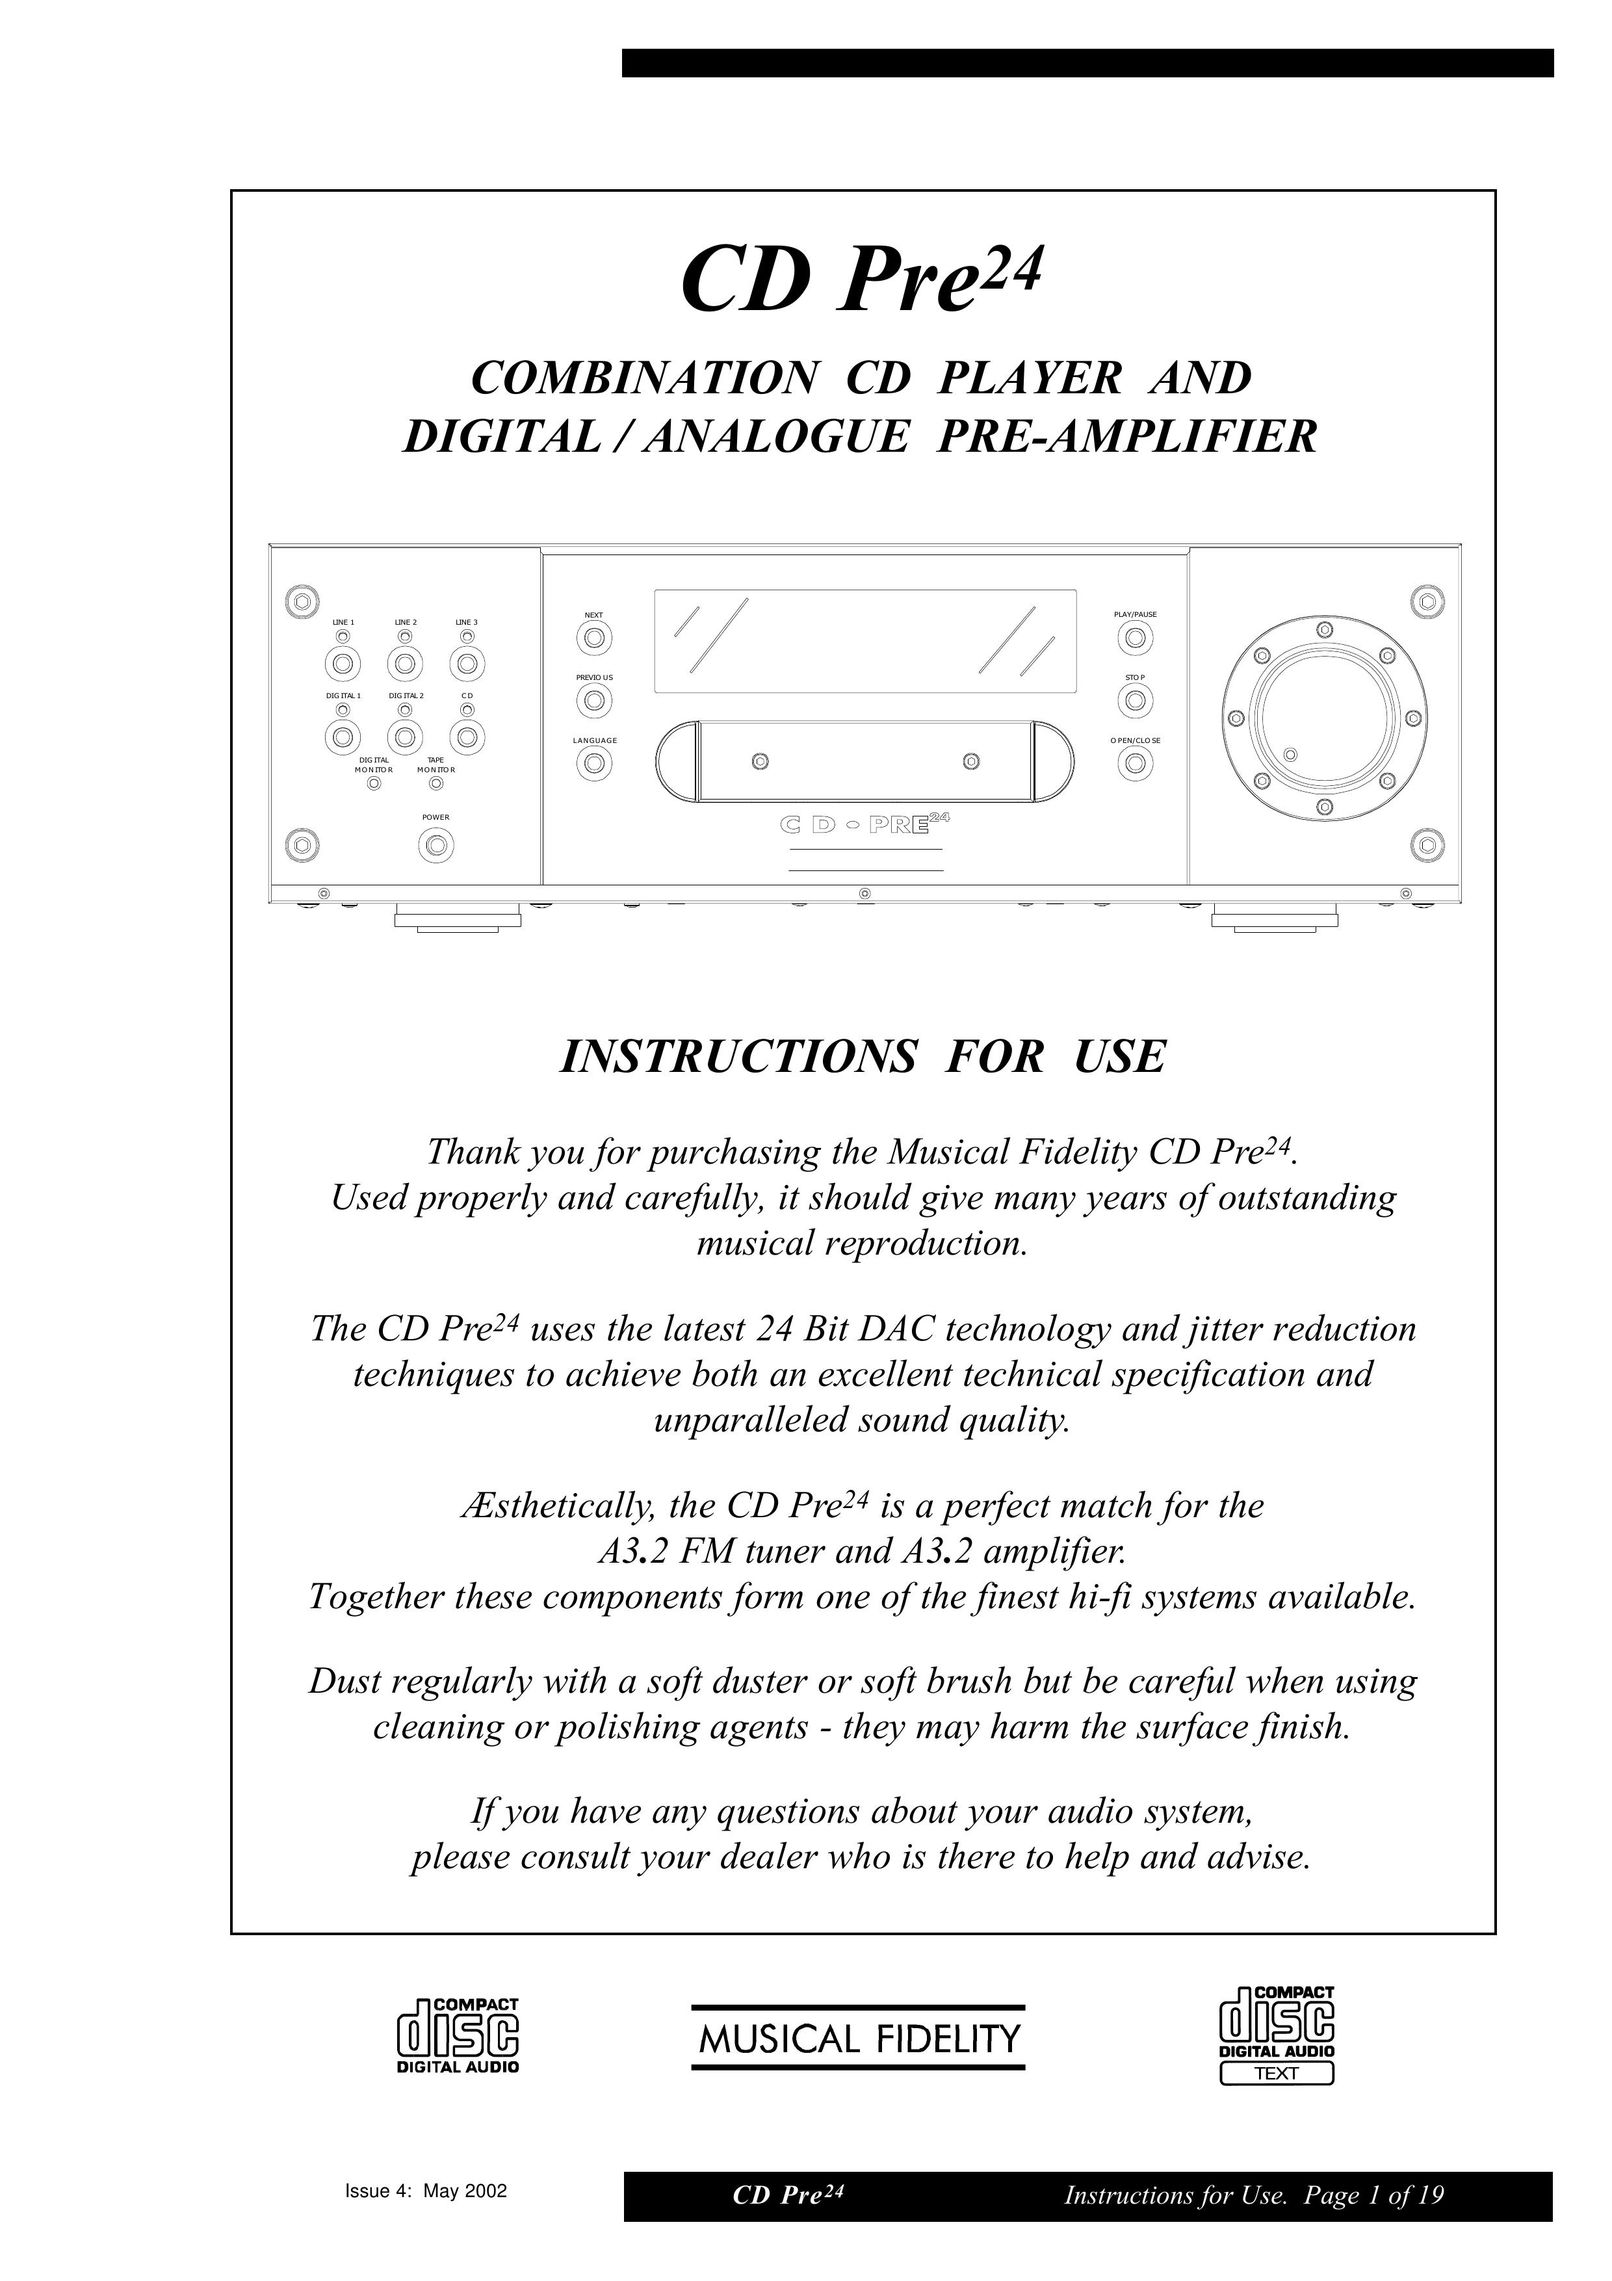 Musical Fidelity CD Pre24 CD Player User Manual